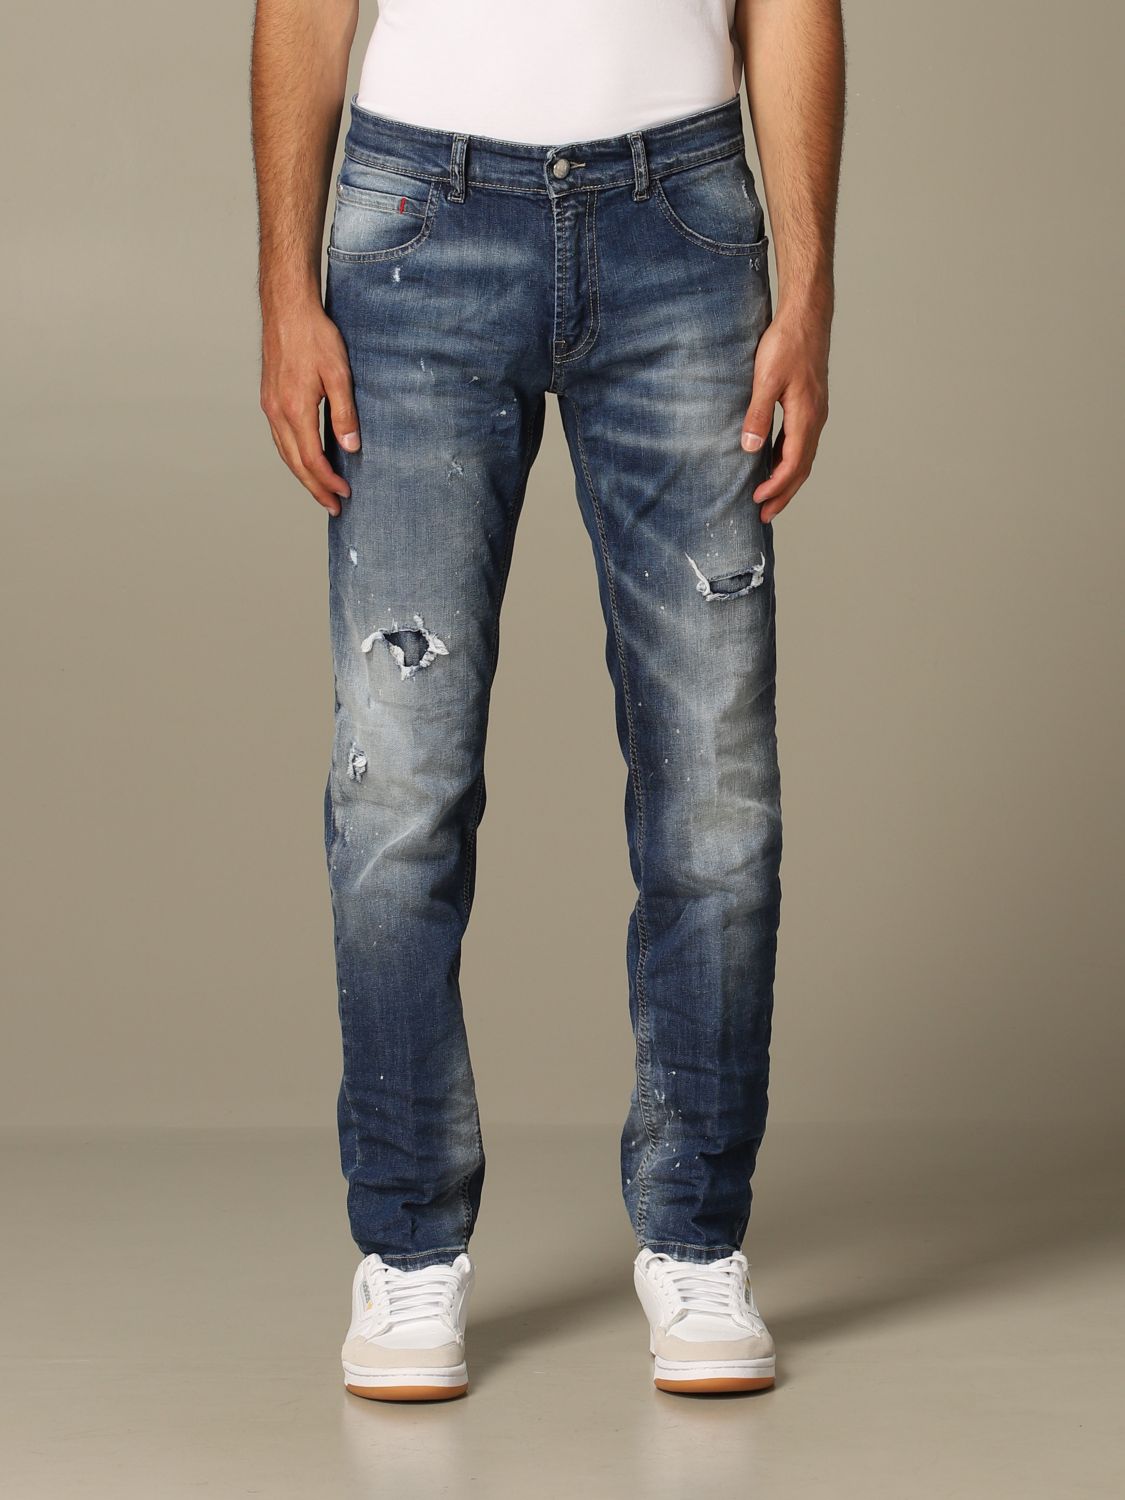 35 waist jeans